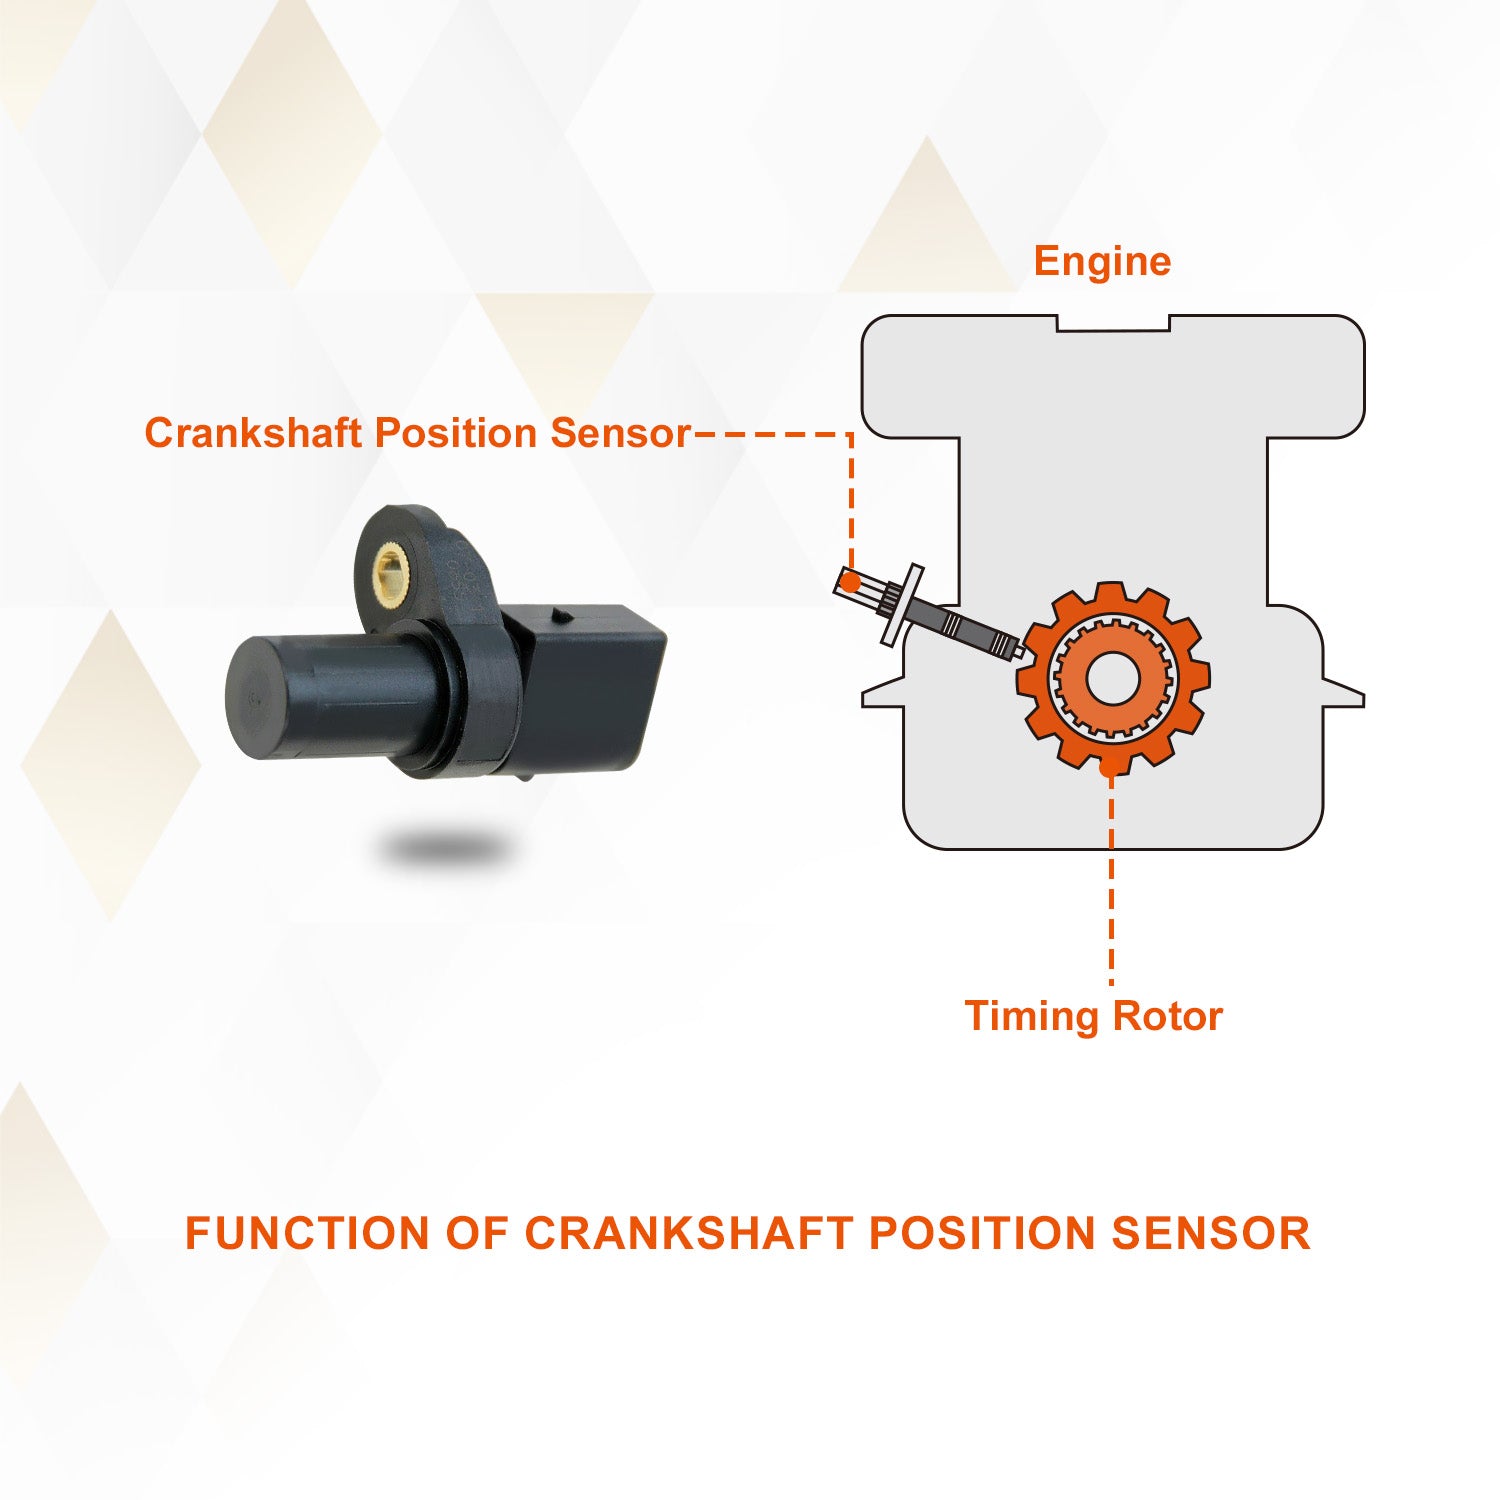 Function of Crankshaft Position Sensor